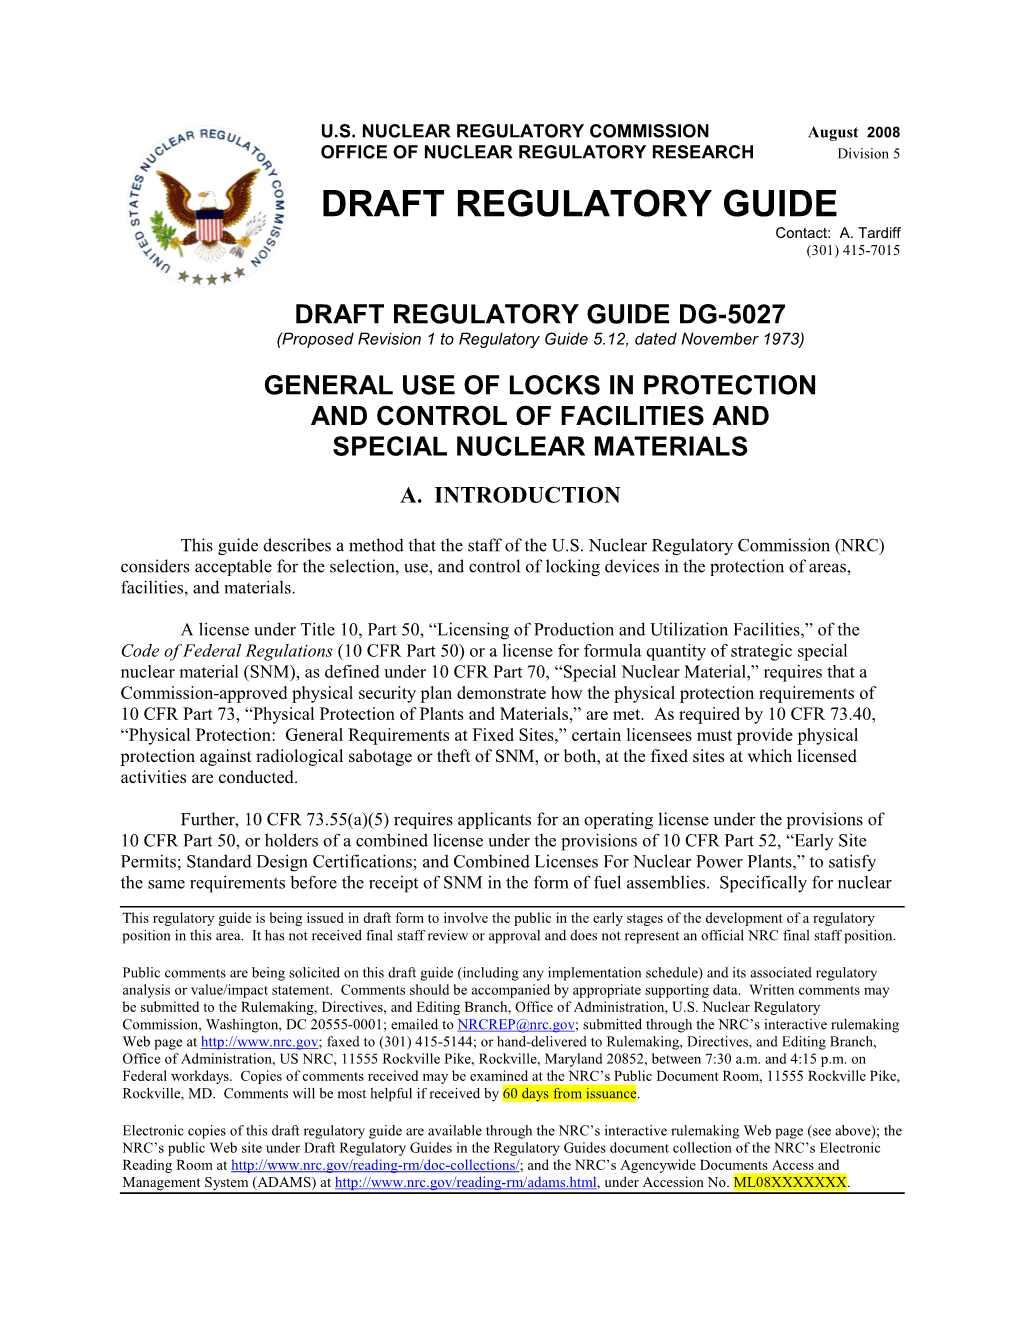 Draft Regulatory Guide DG-5027, General Use of Locks in Protection